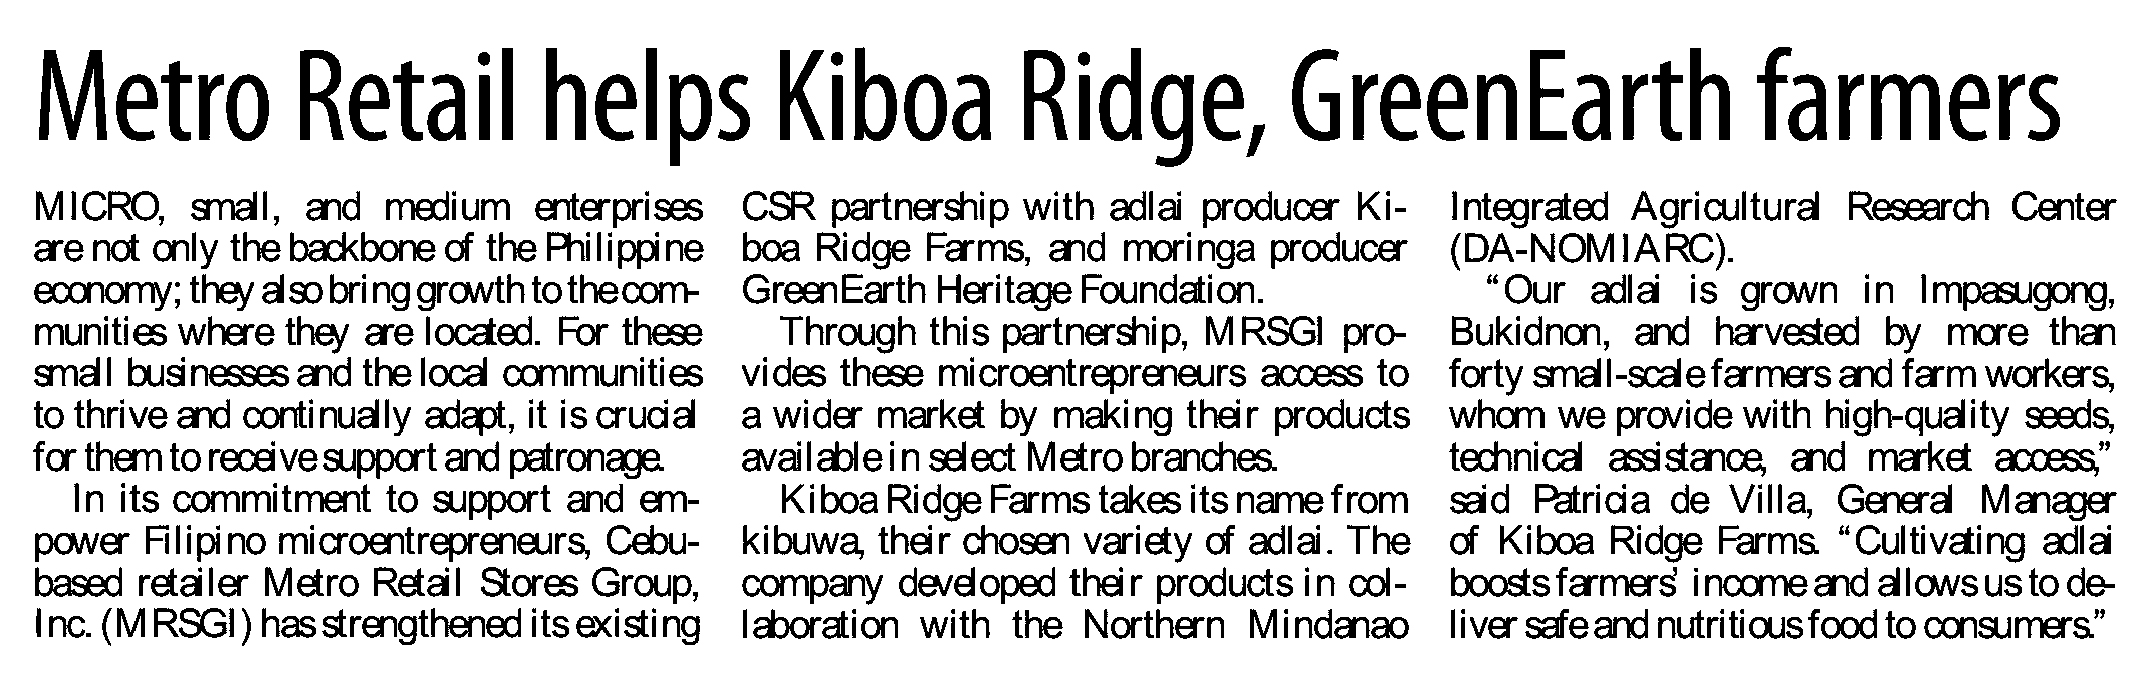 December 25 2020 Metro Retail helps Kiboa Ridge GreenEarth farmers Manila Standard Philippines